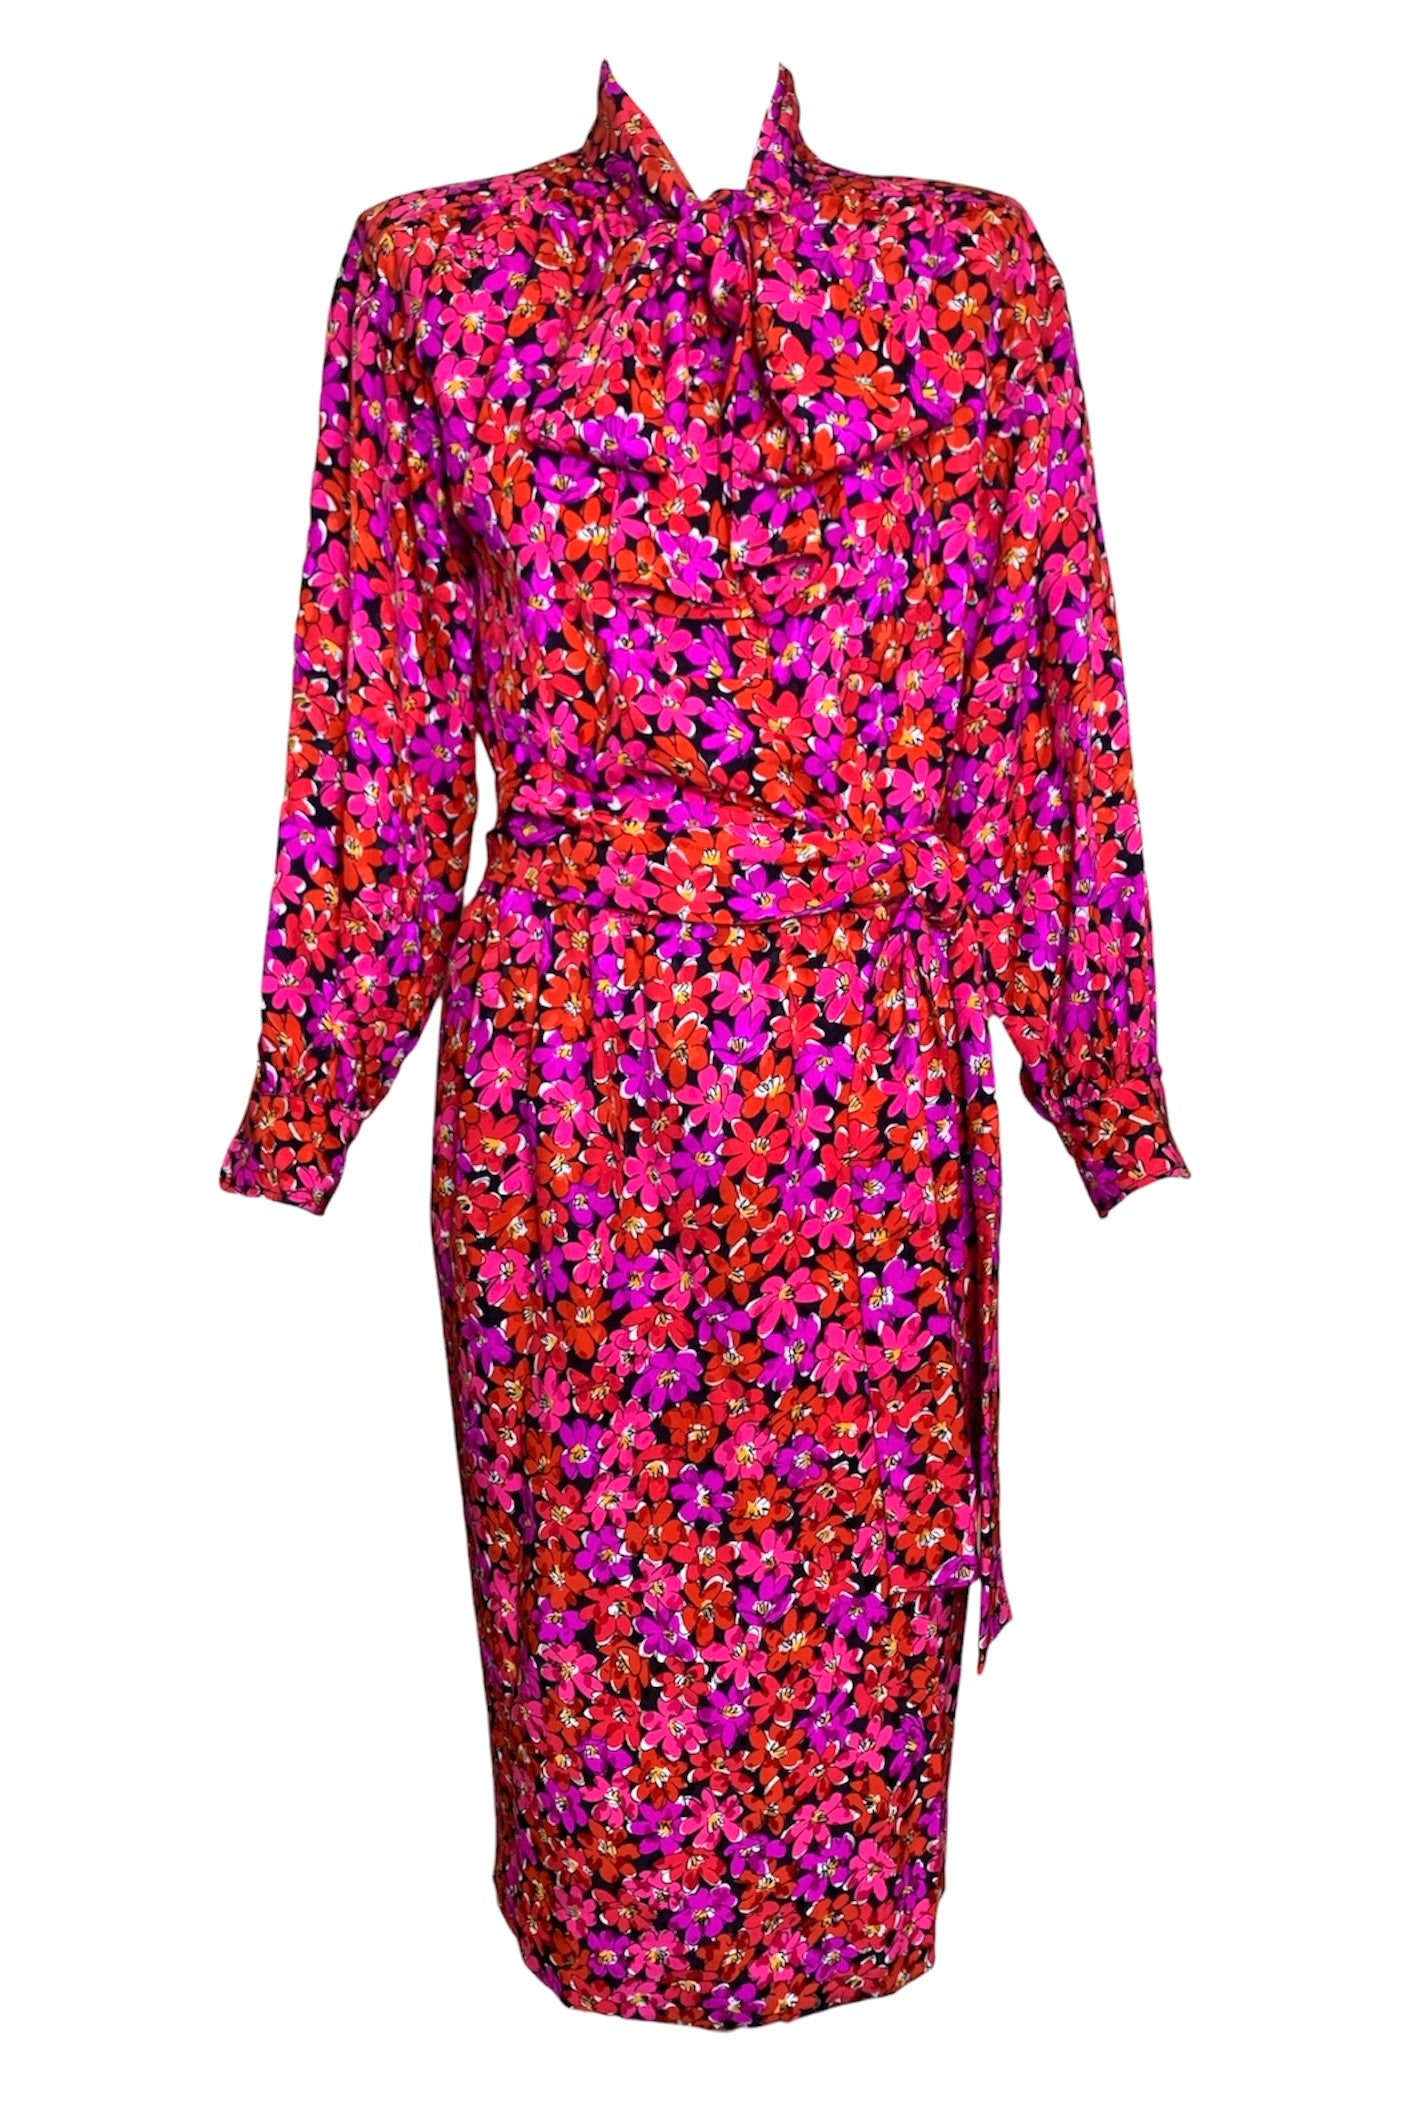 1989 Saint Laurent Magenta Silk Floral Print Dress Ensemble FULL ENSEMBLE FRONT